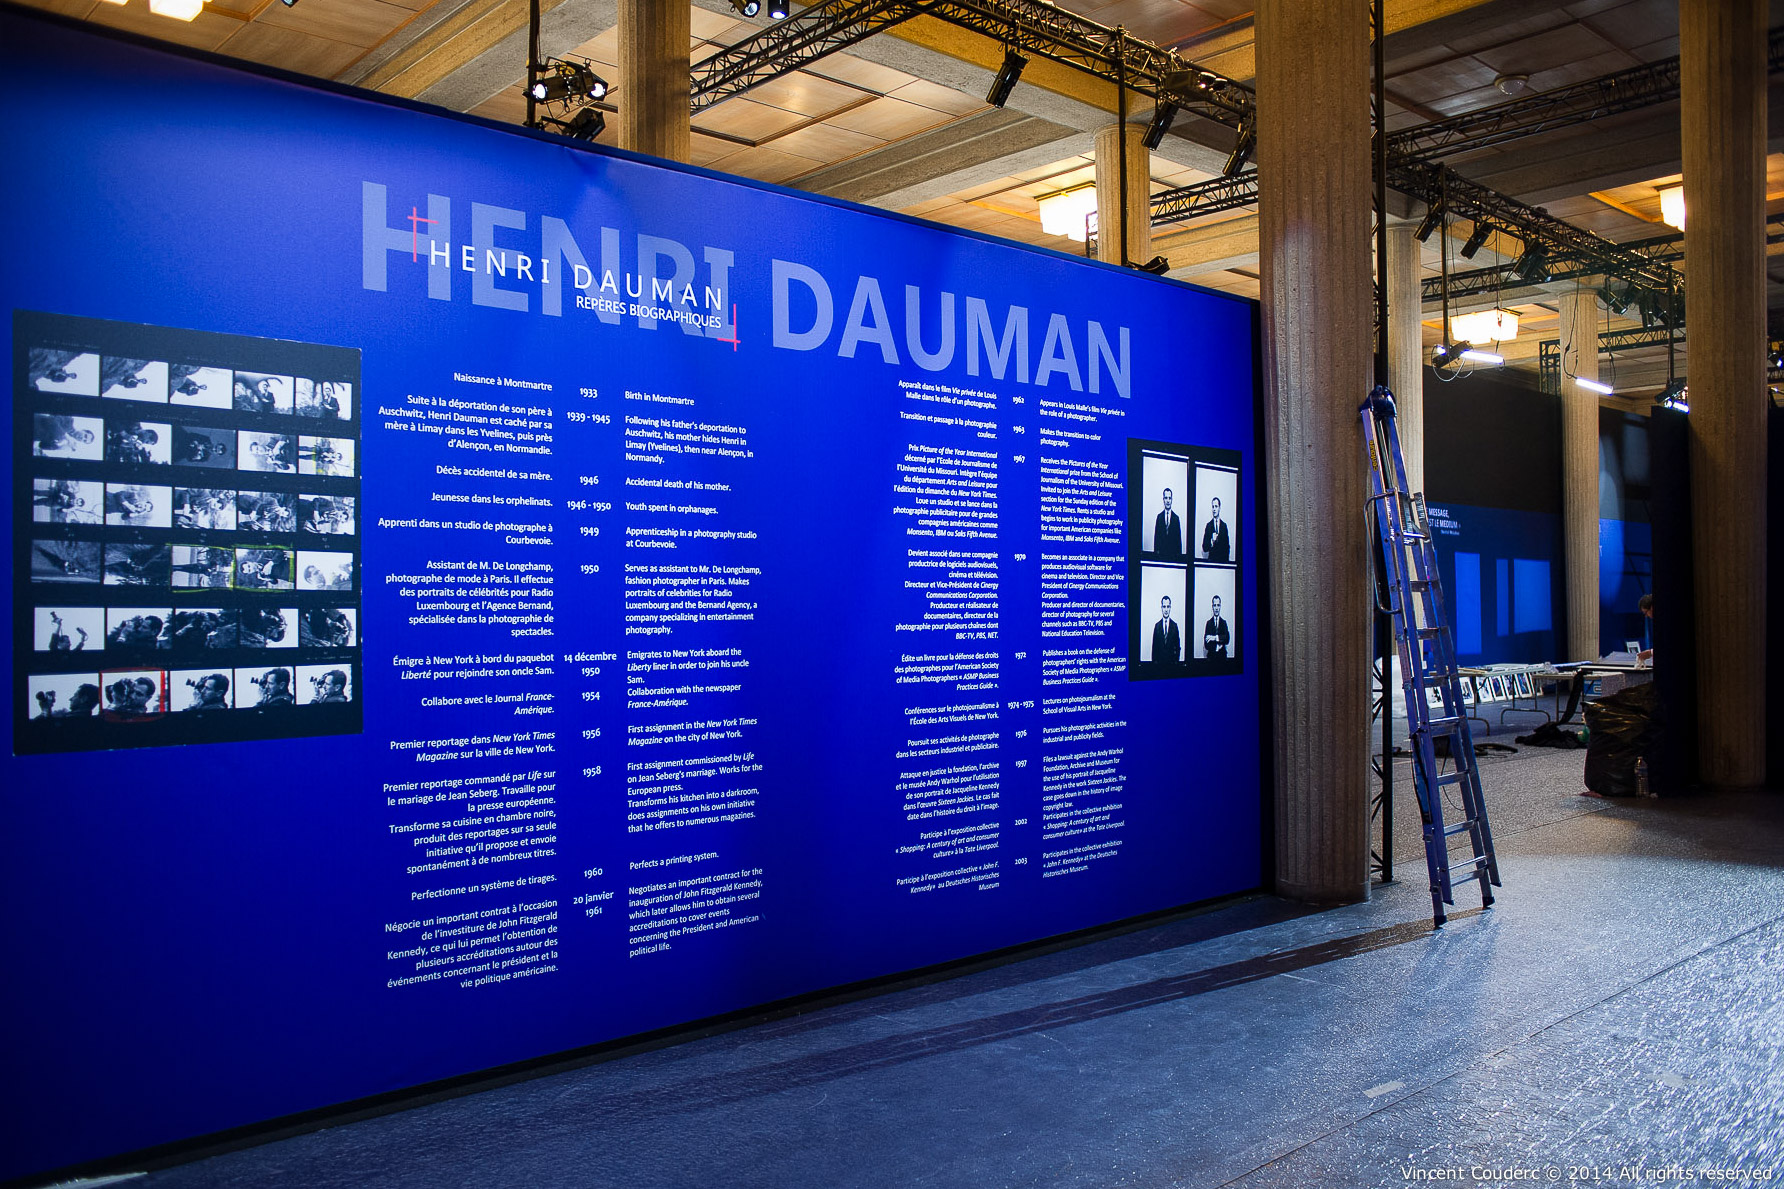  La Darkroom  Exposition sur le travail du photographe Henri Dauman Palais d'Iéna,&nbsp;Paris, 2014.   www.manhattan-darkroom.com  